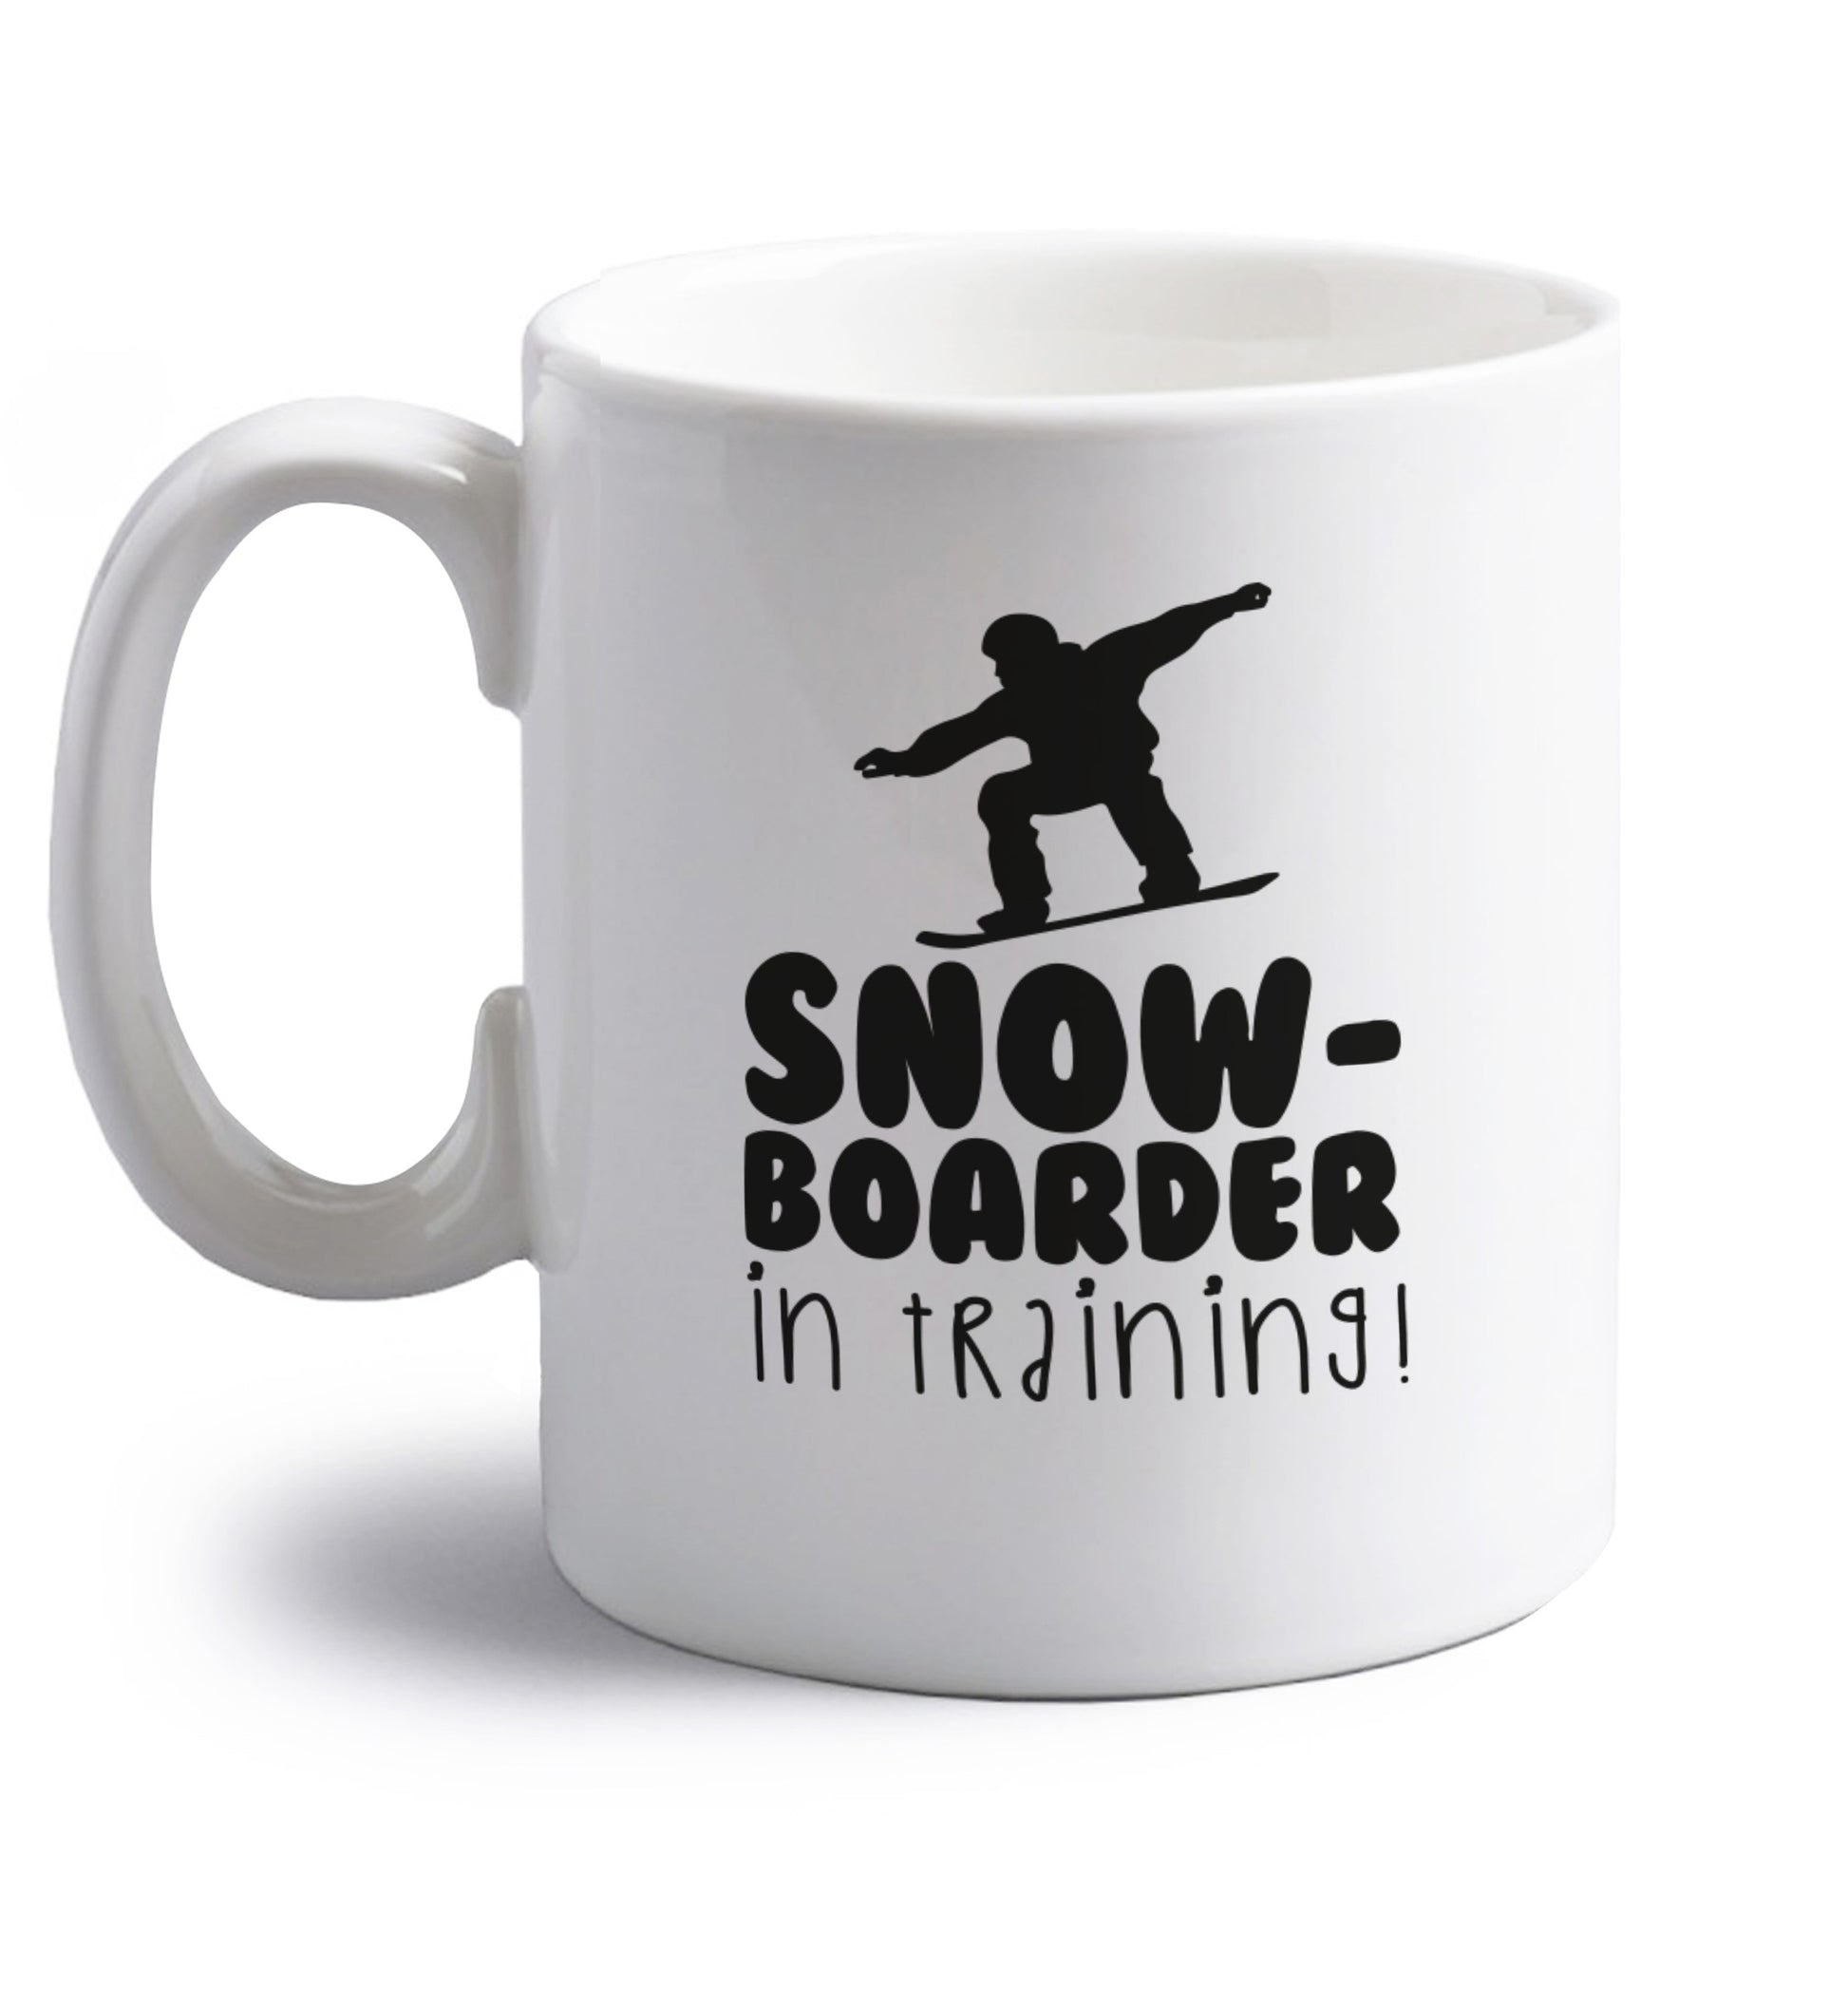 Snowboarder in training right handed white ceramic mug 